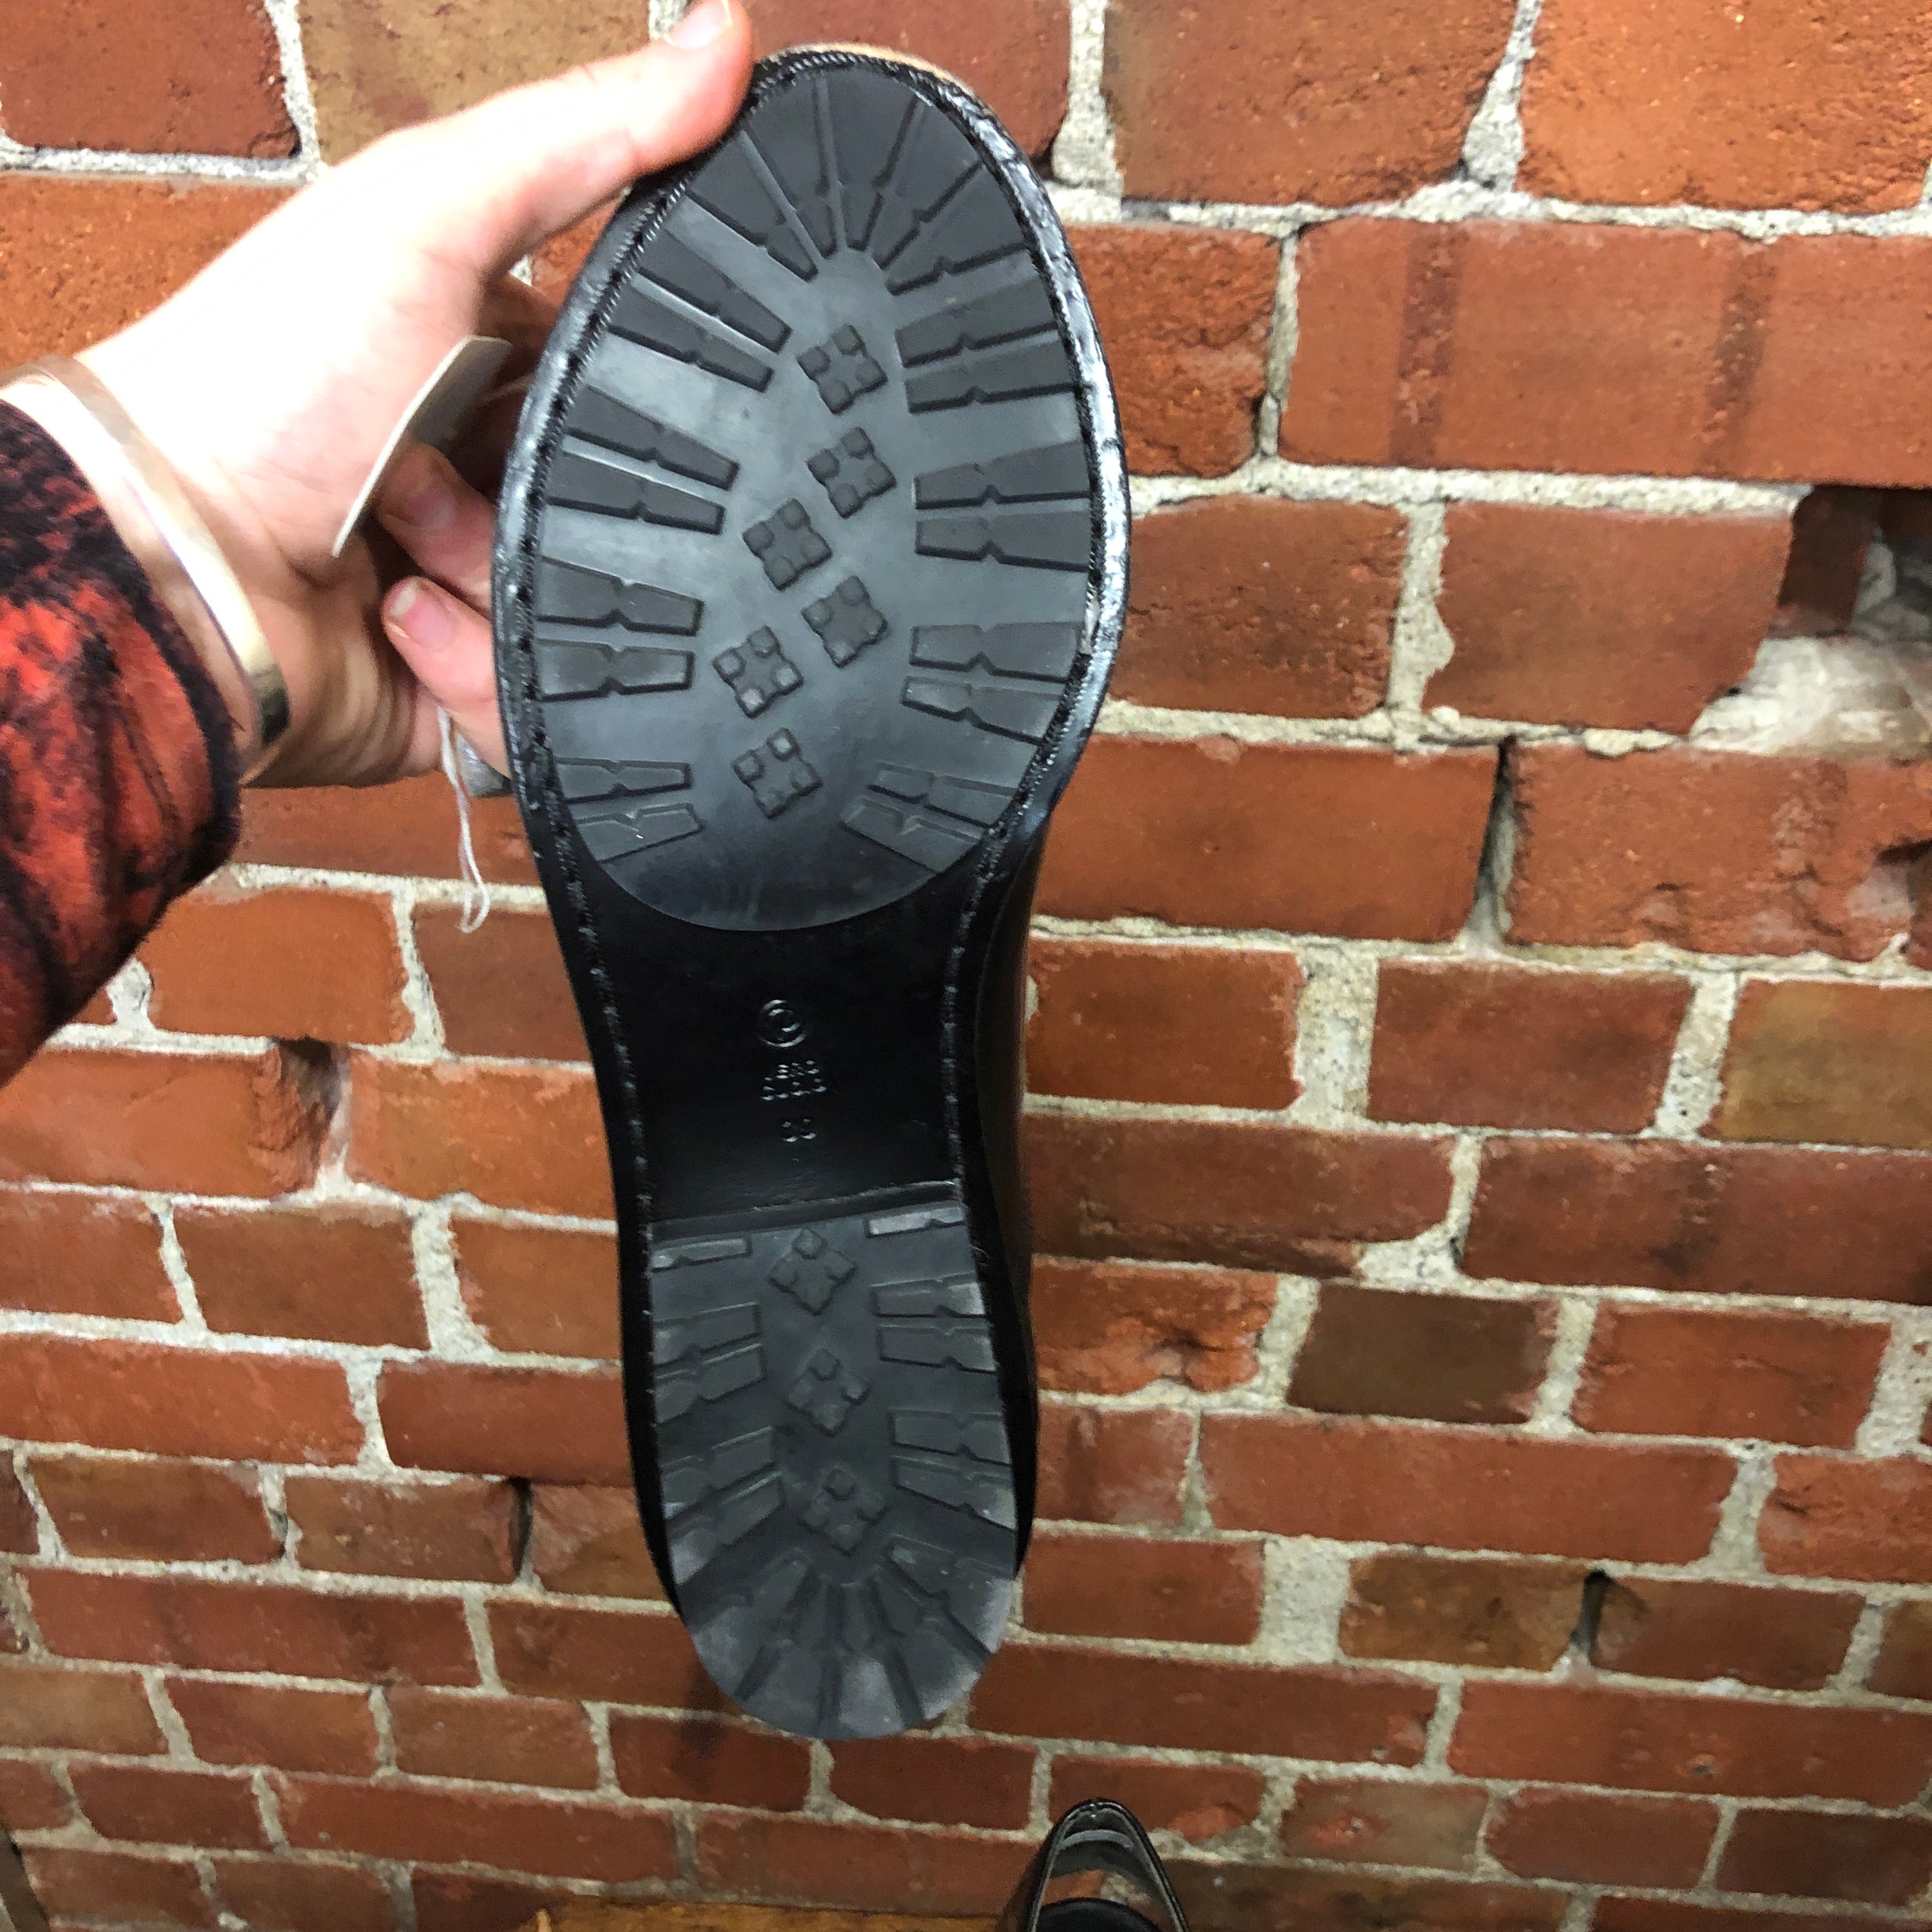 PHILLIP LIM cut out leather shoes 39